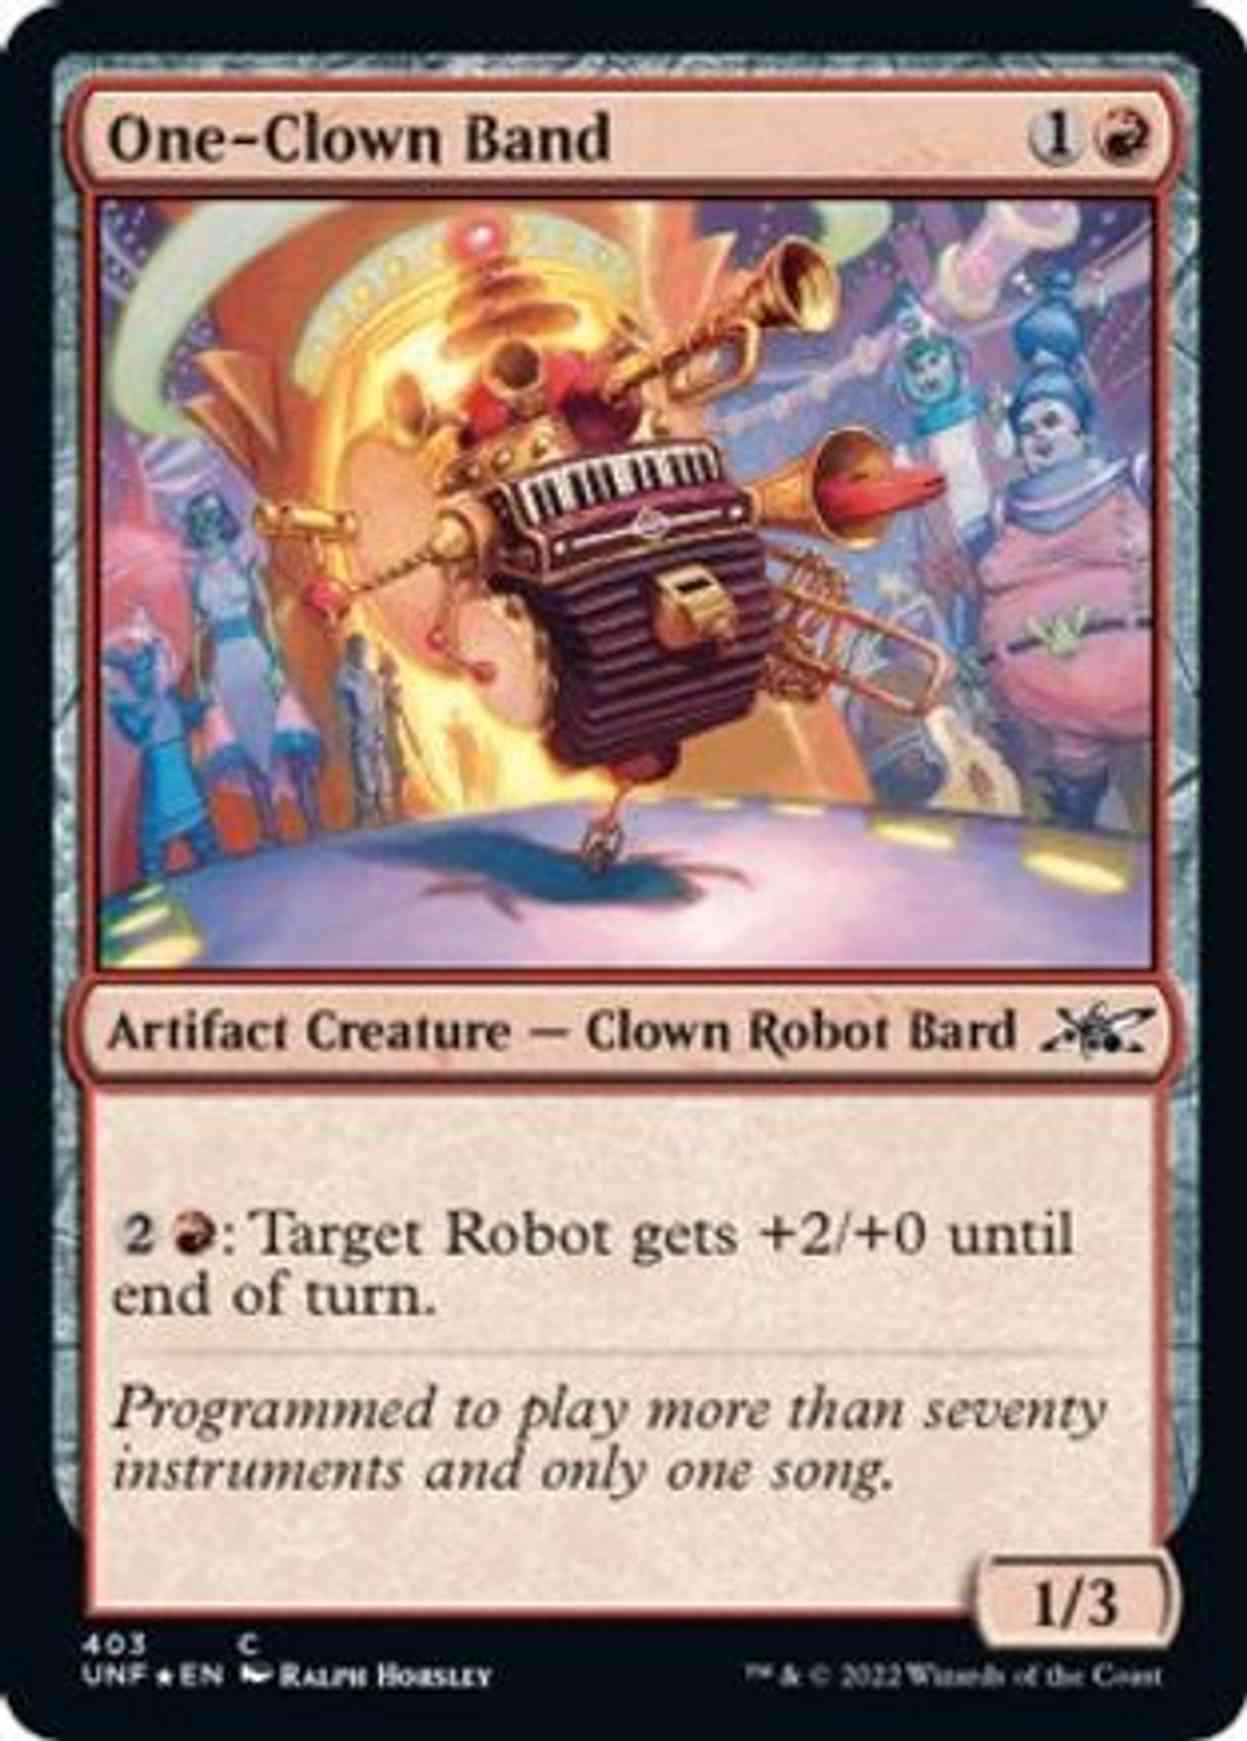 One-Clown Band (Galaxy Foil) magic card front